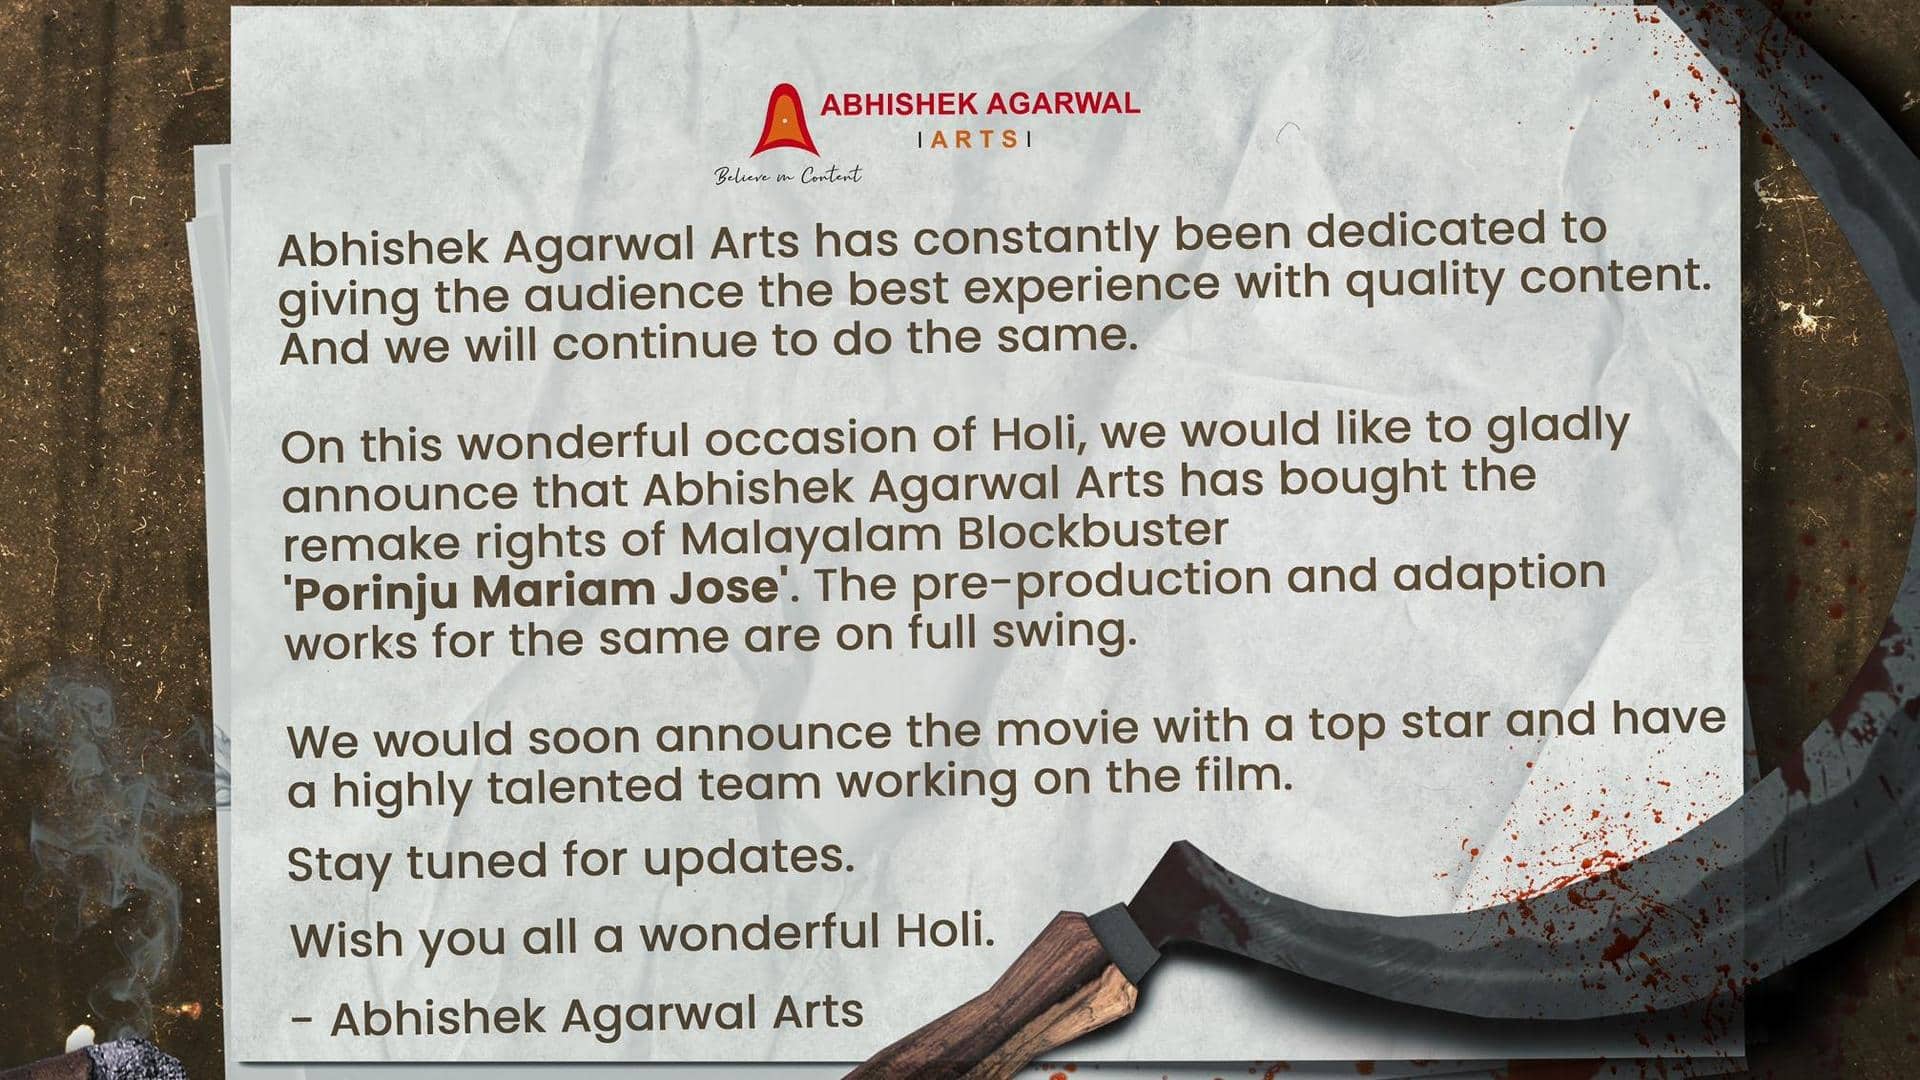 Abhishek Agarwal Arts acquires remake rights of 'Porinju Mariam Jose'